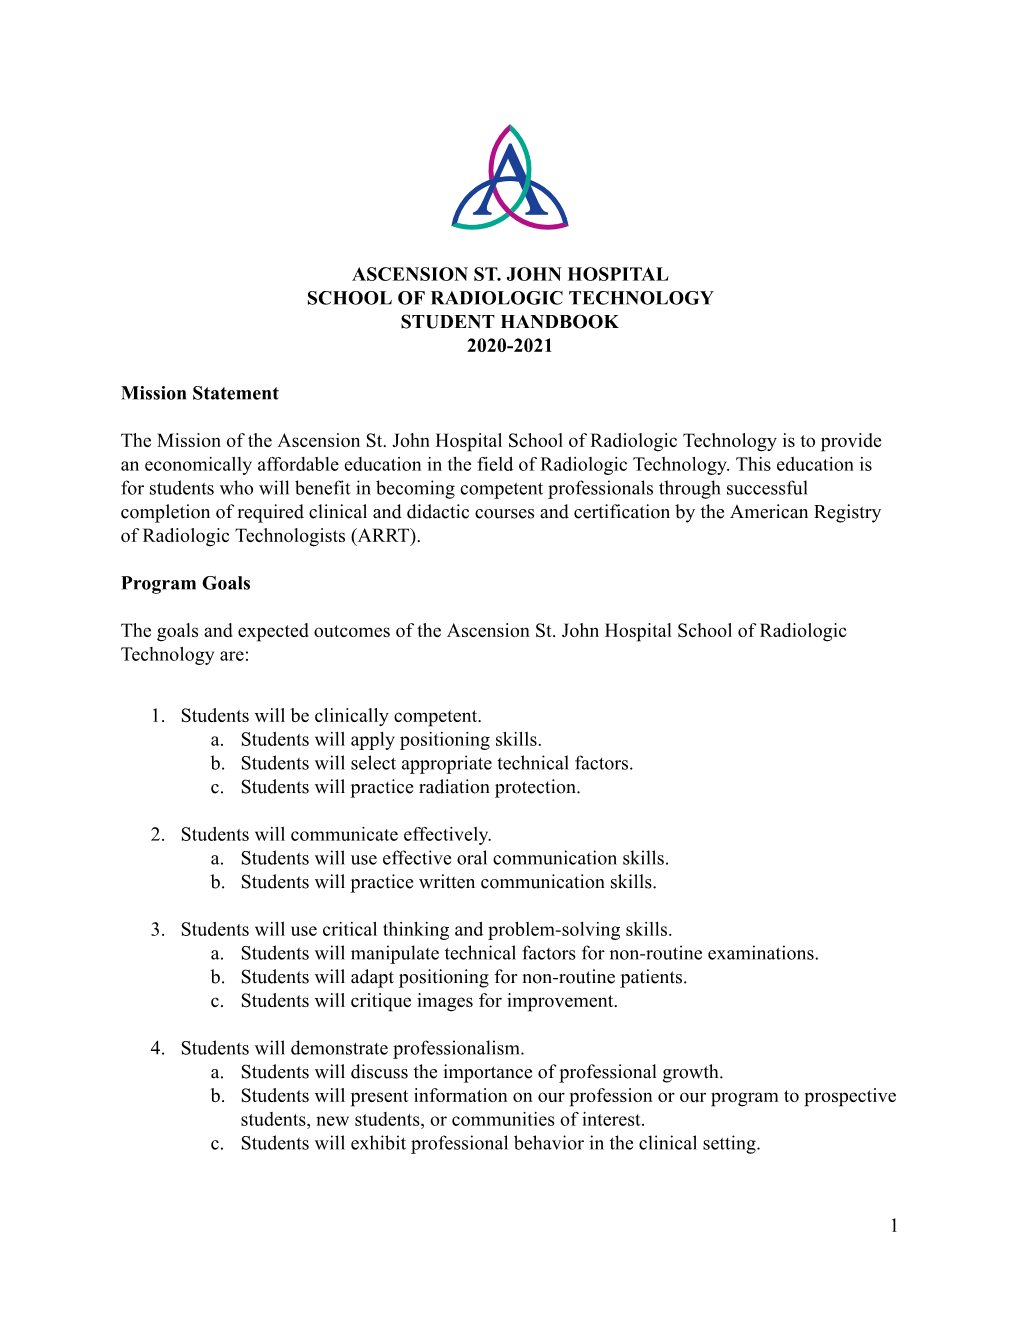 Ascension St. John Hospital School of Radiologic Technology Student Handbook 2020-2021